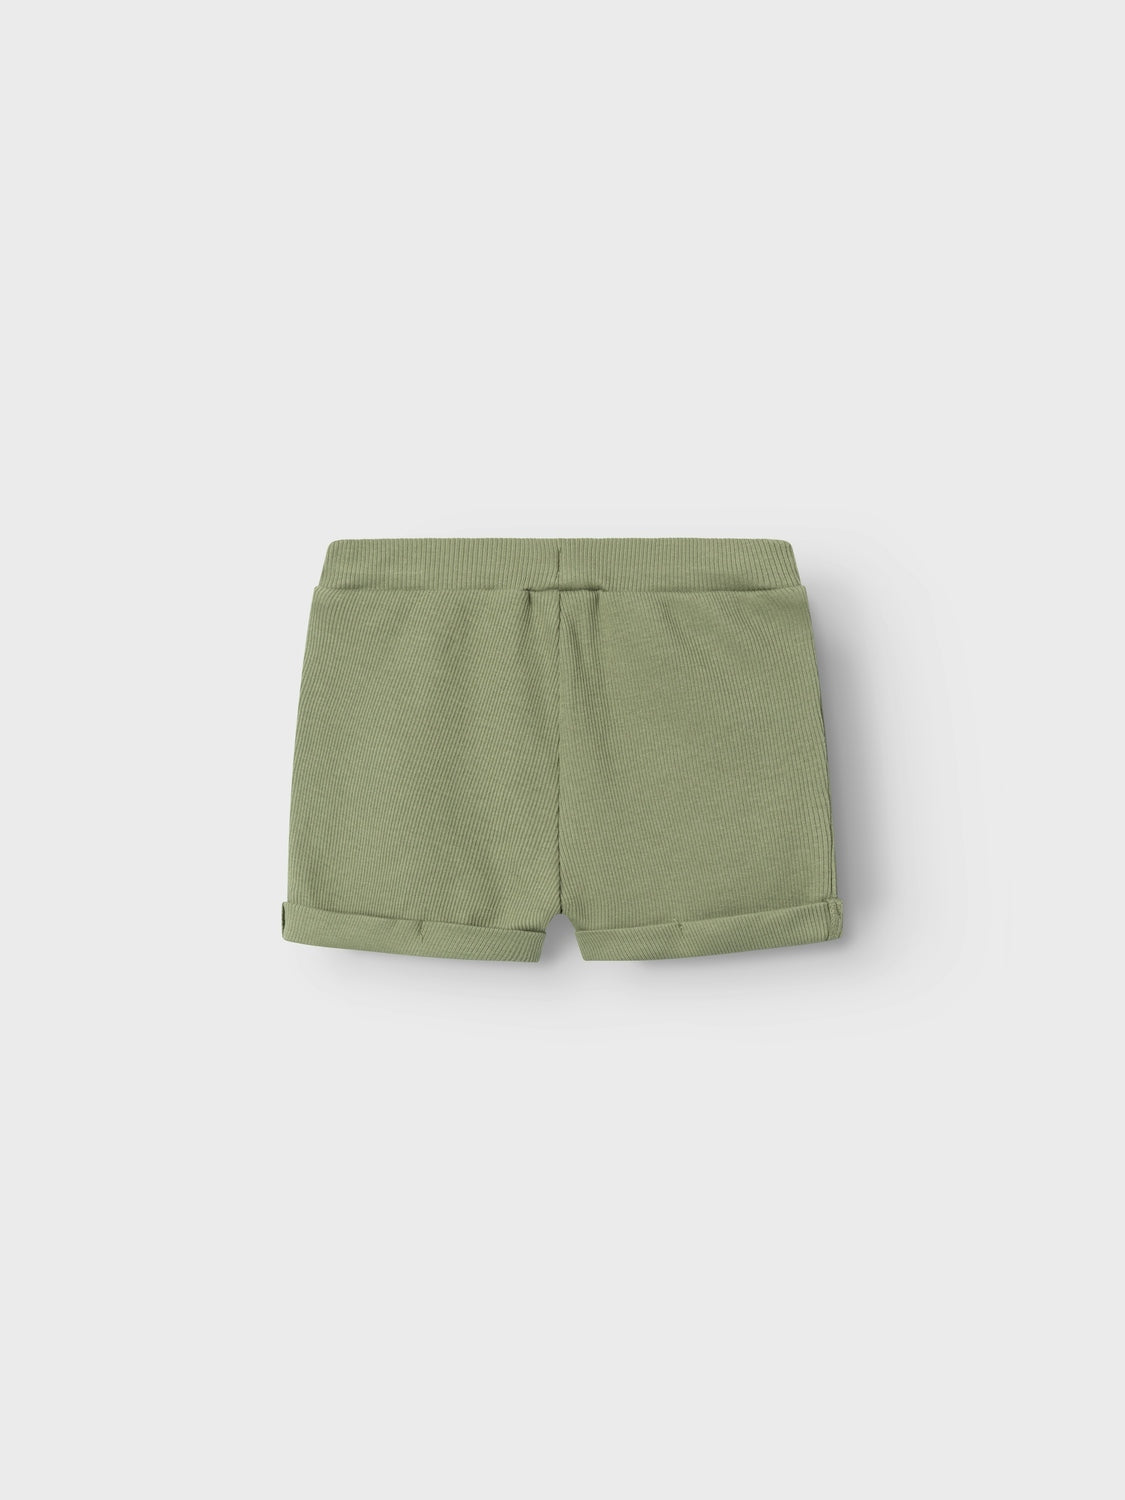 Name it - Jular shorts - Oil green